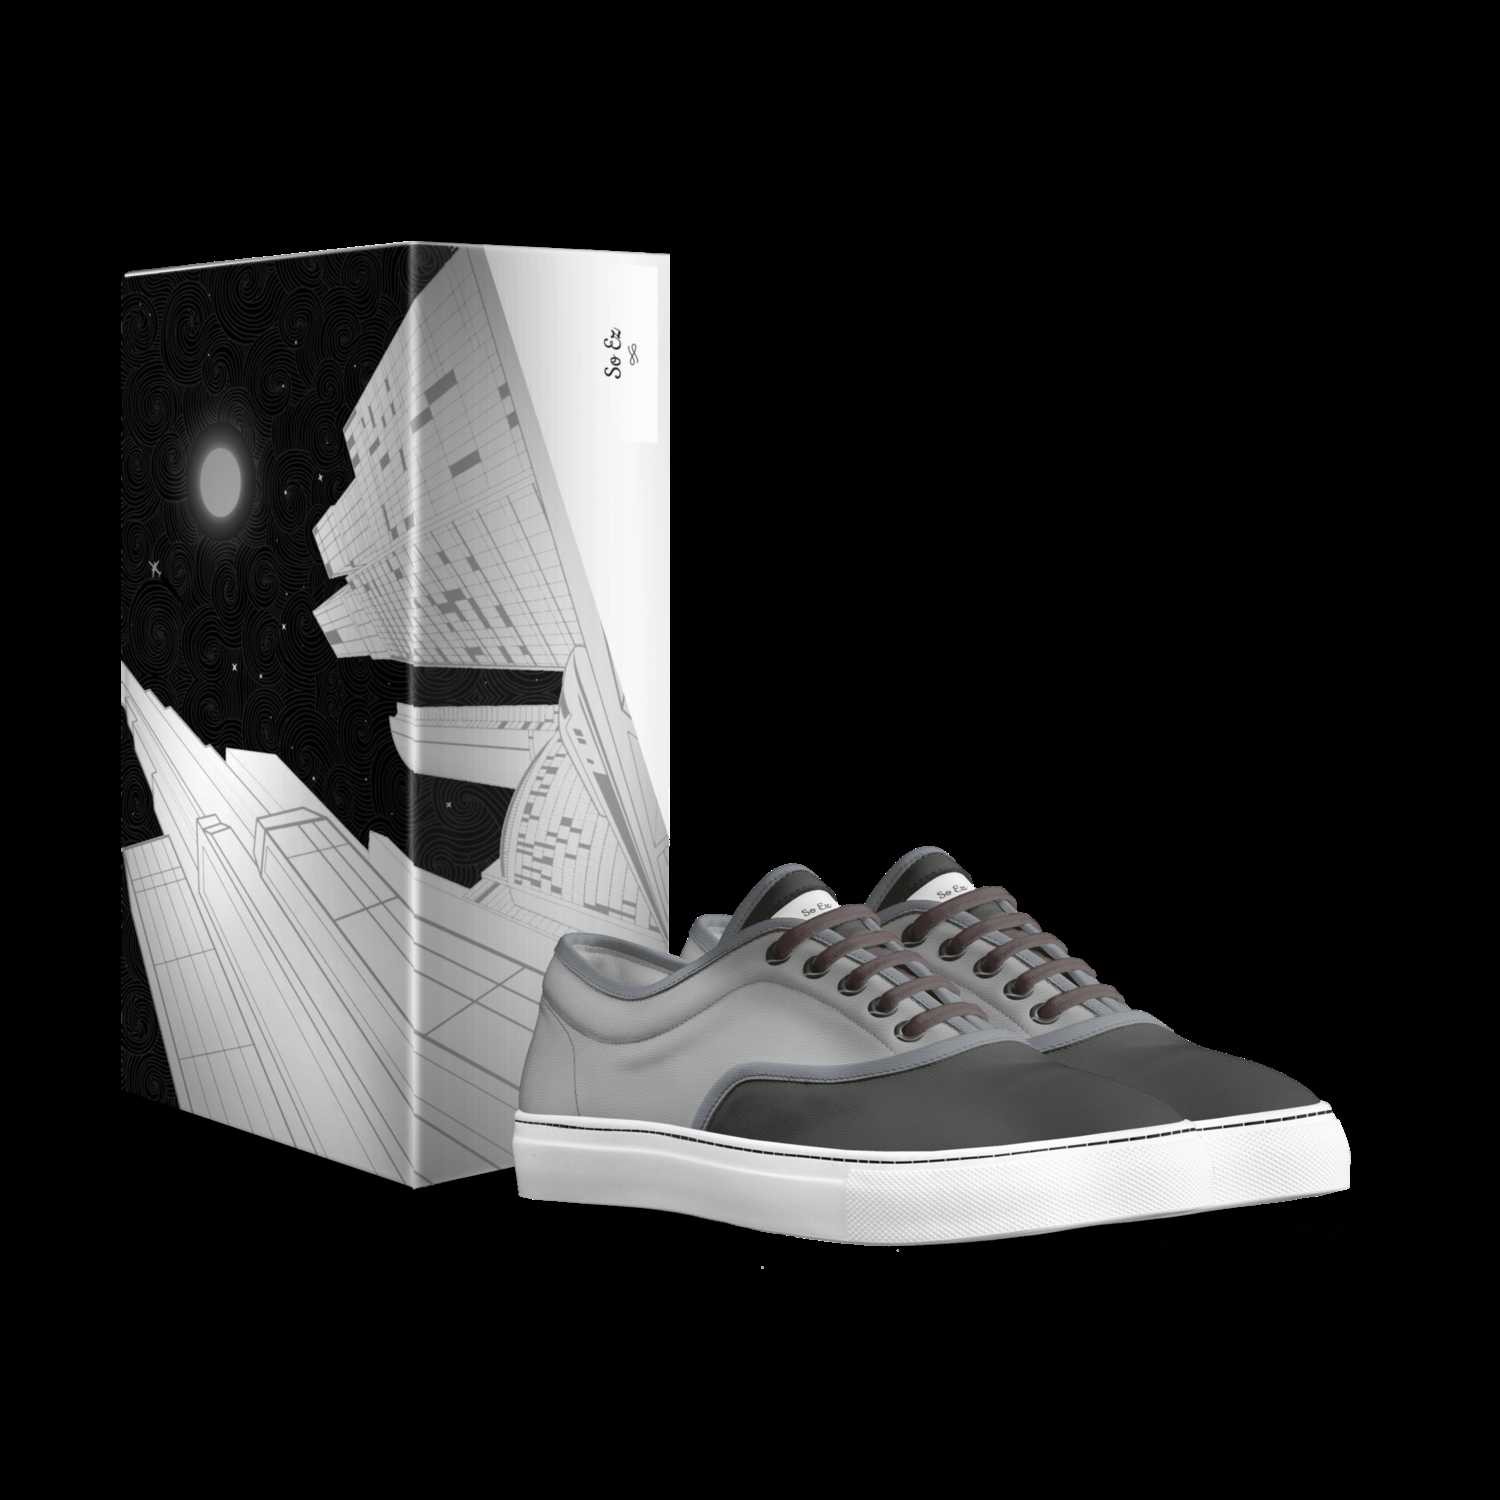 So Ez | A Custom Shoe concept by John Lloyd